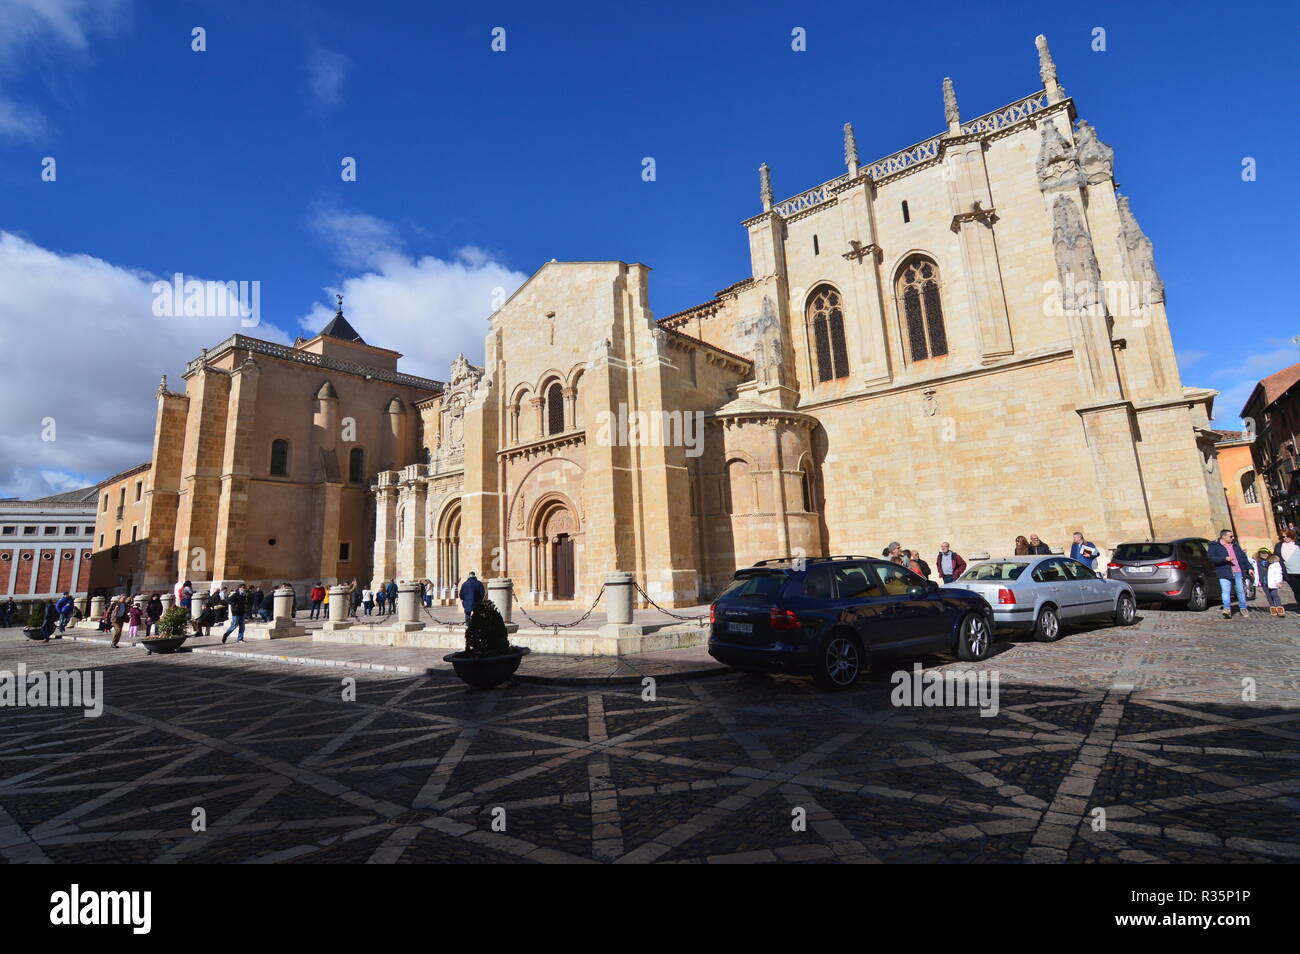 Side Shot Of The Basilica Of San Isidoro In Leon. Architecture, Travel, History, Street Photography. November 2, 2018. Leon Castilla y Leon Spain. Stock Photo